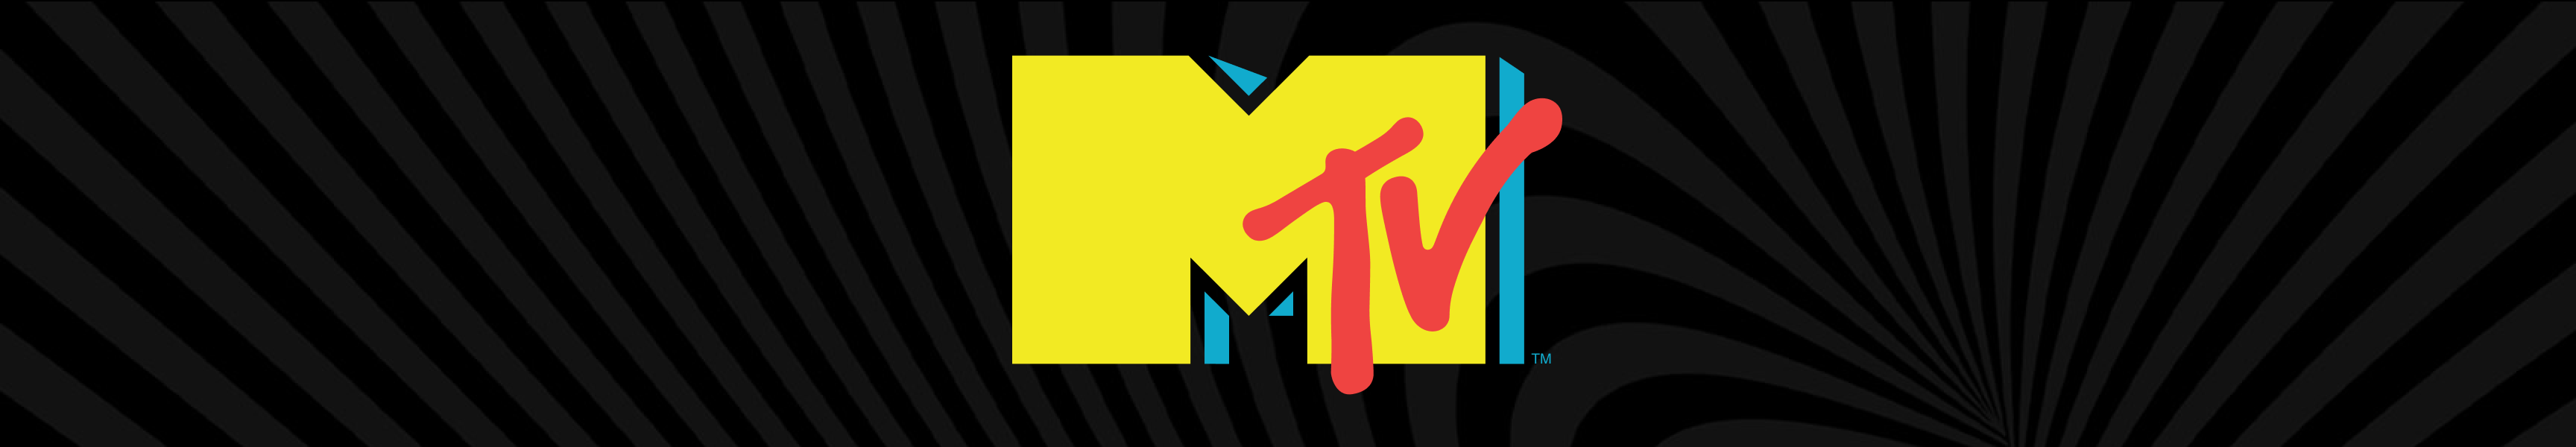 MTV Wine Glasses